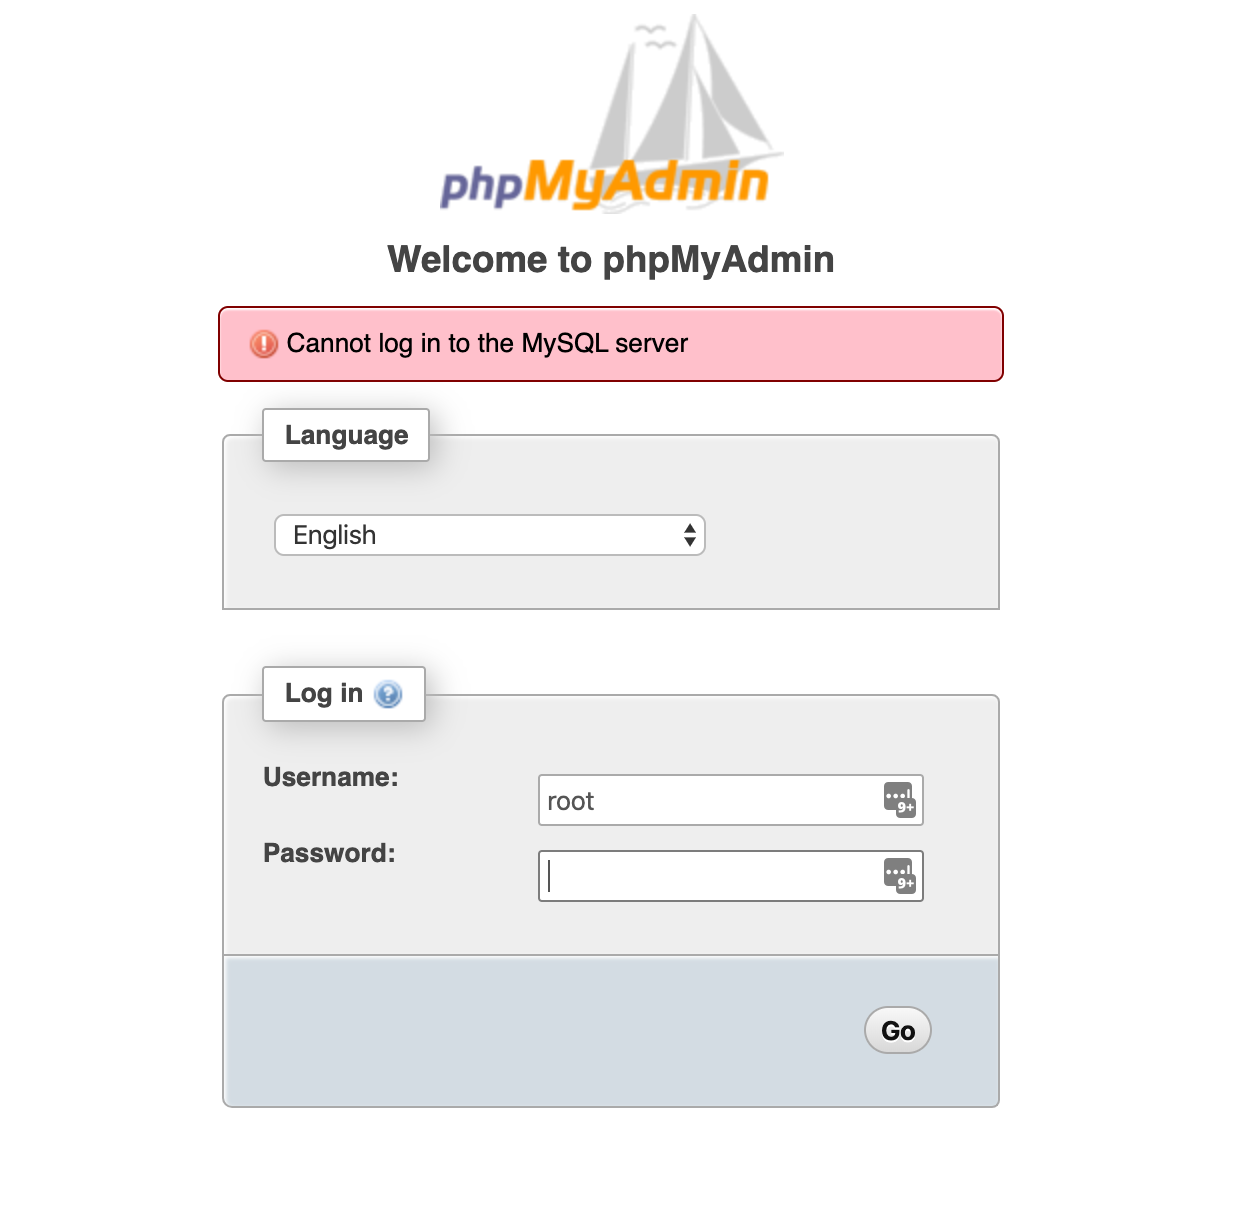 Phpmyadmin keeps asking for password